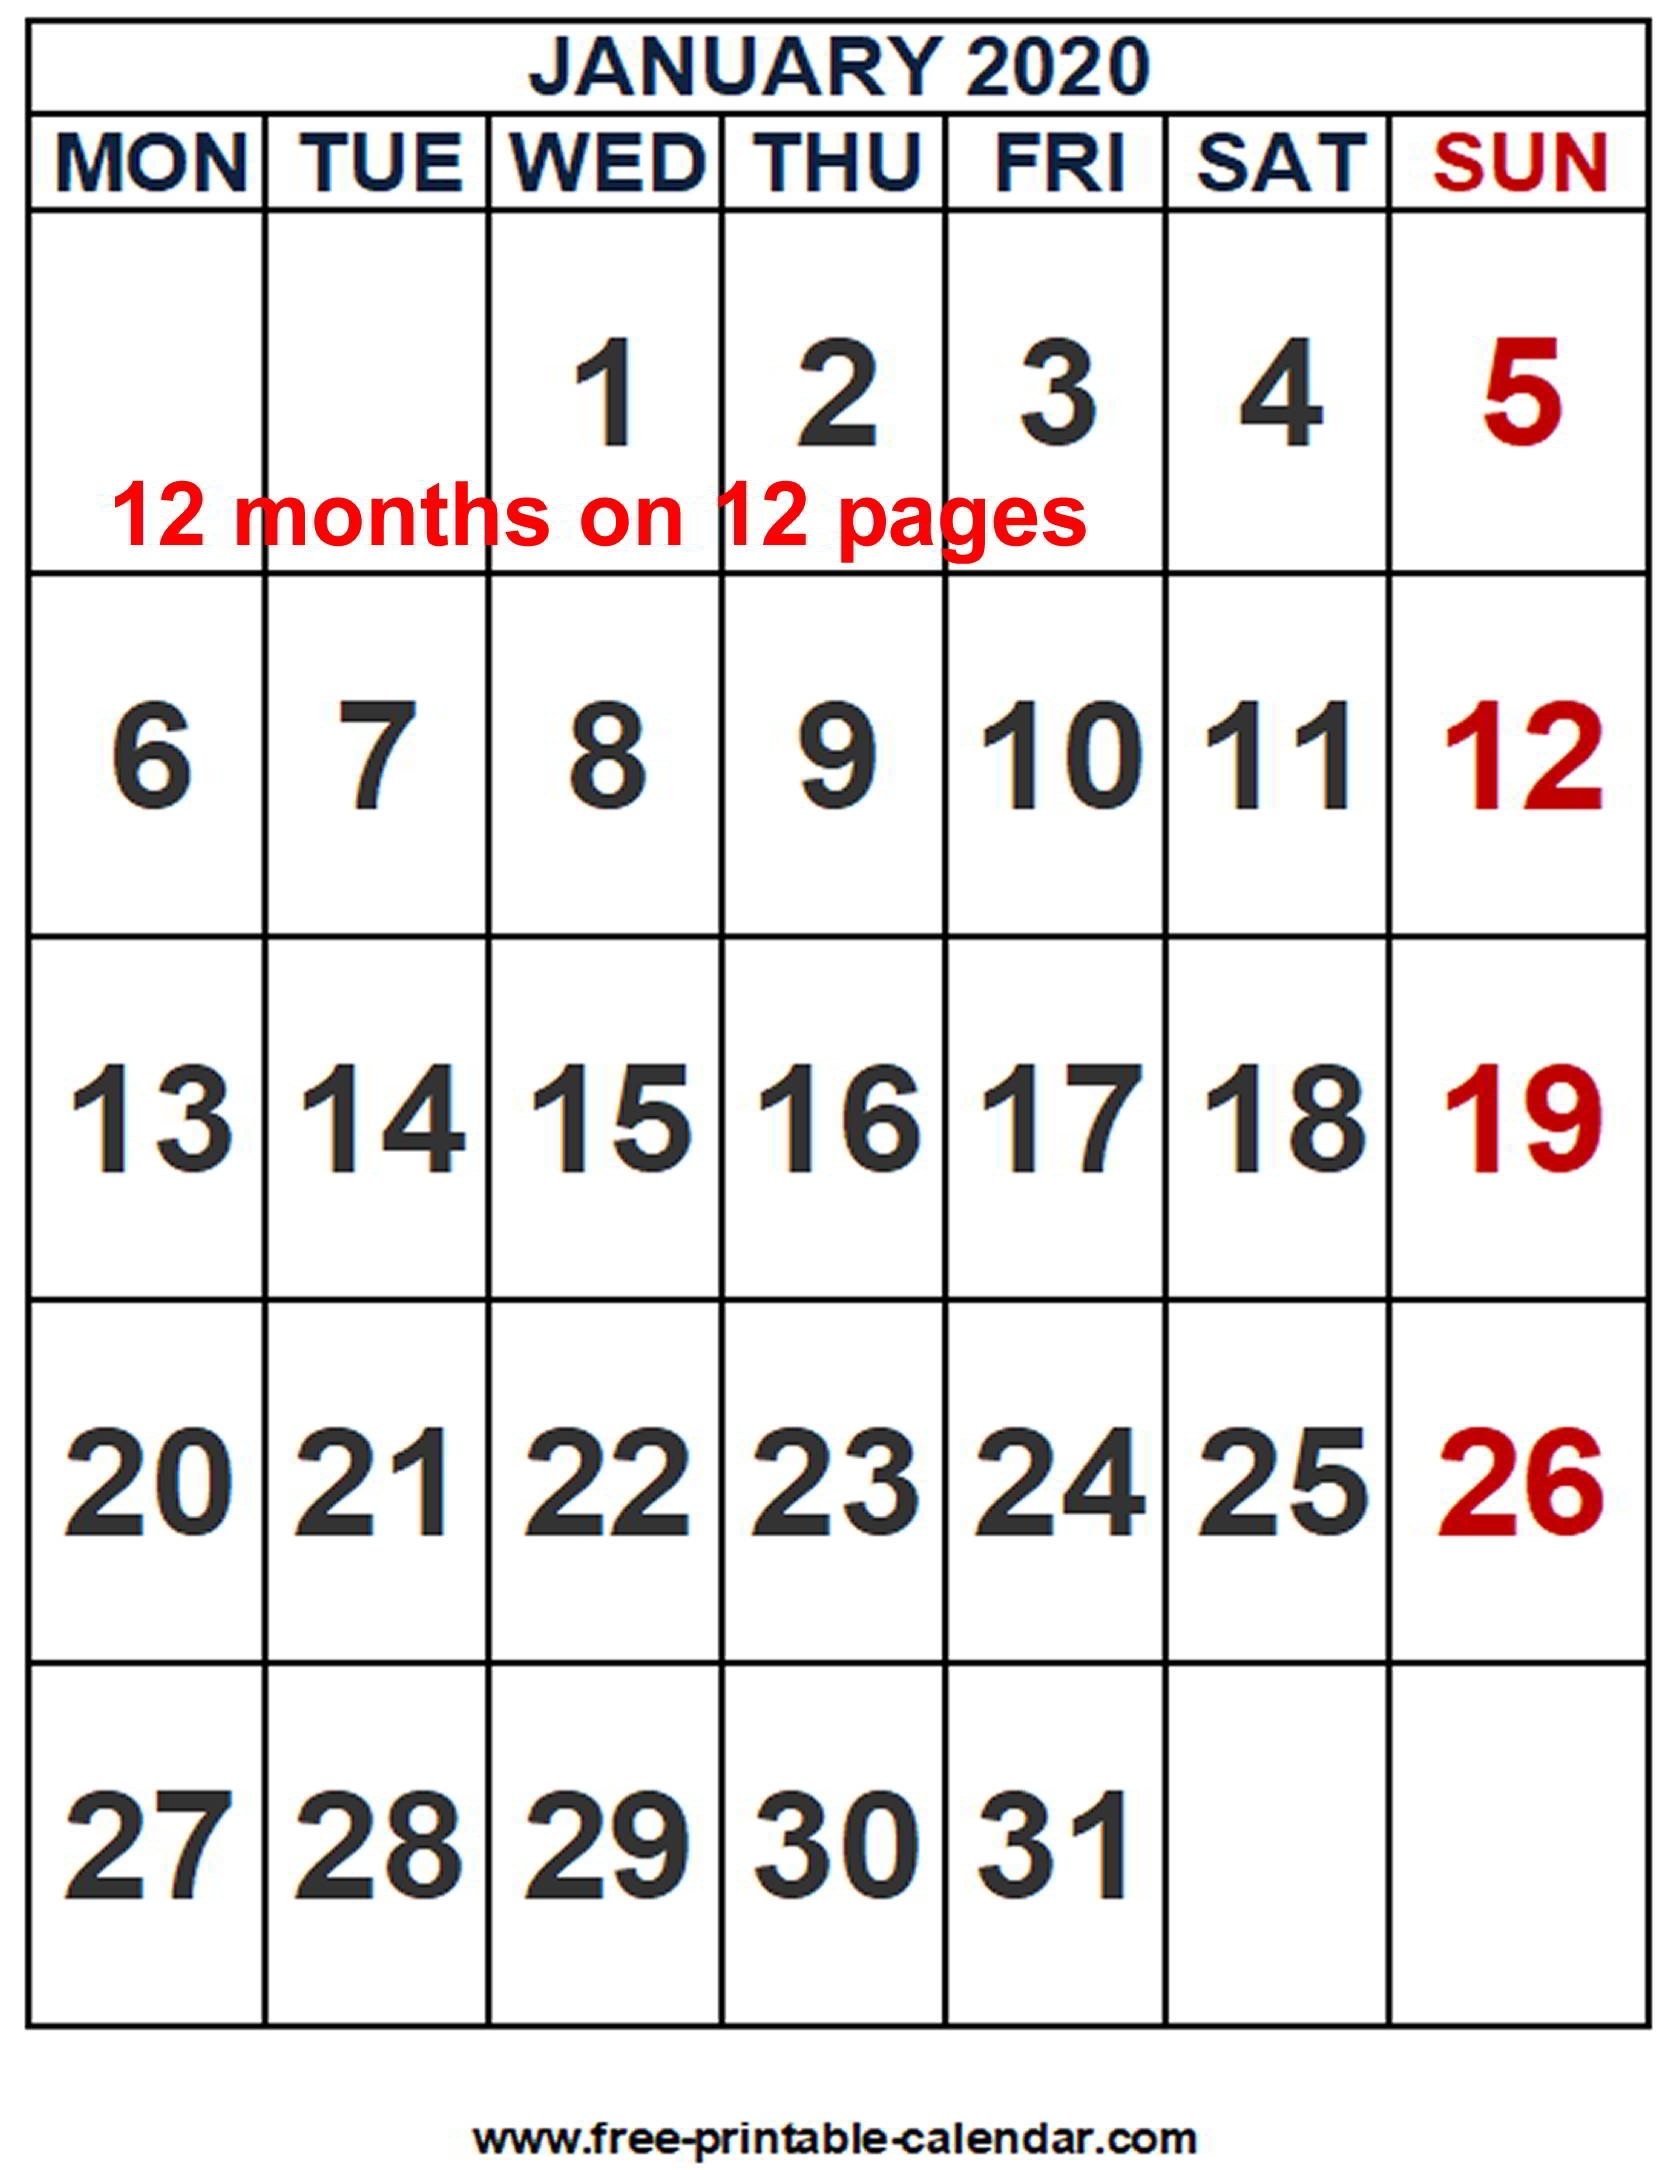 2020 Calendar Word Template - Free-Printable-Calendar Ms Word Printable Calendars 2020